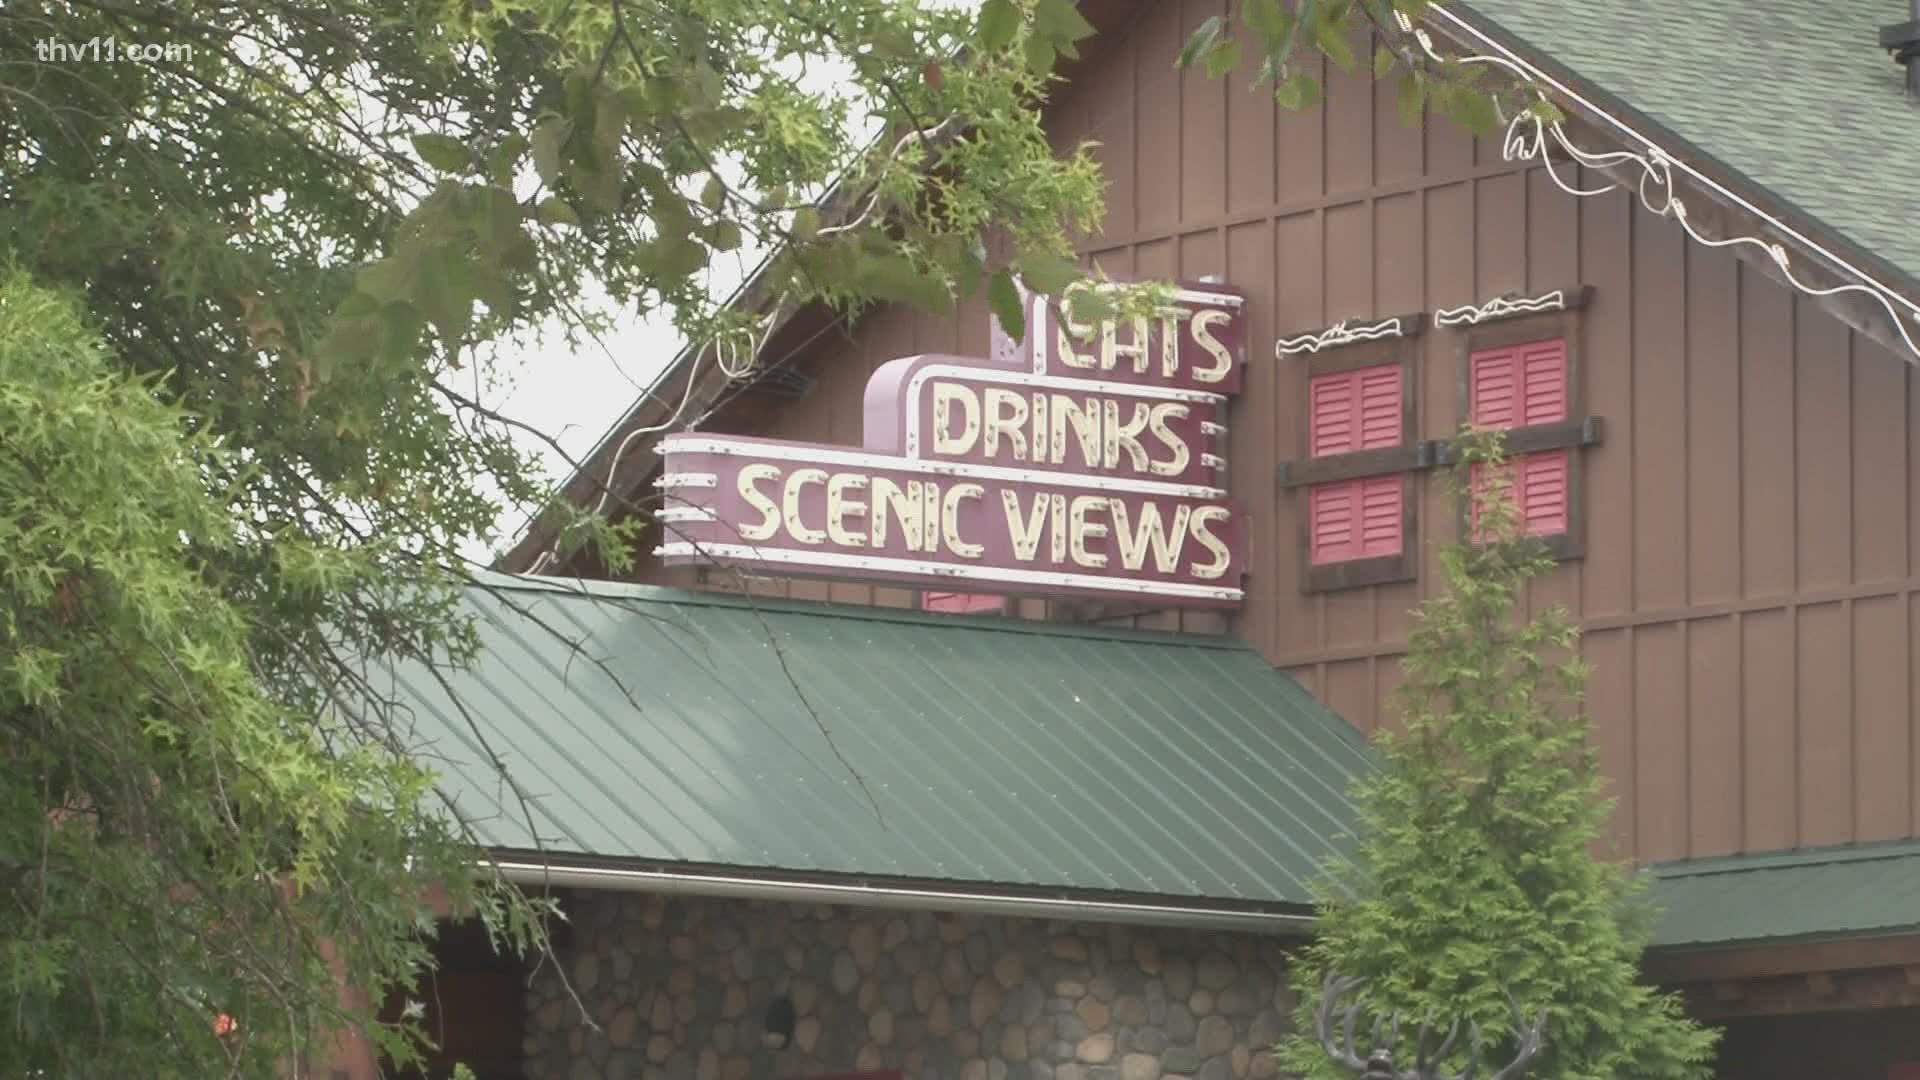 At around 11 p.m. Saturday night, 25-year-old Kentarius Scott was picked in the Little Rock Twin Peaks restaurant parking lot.